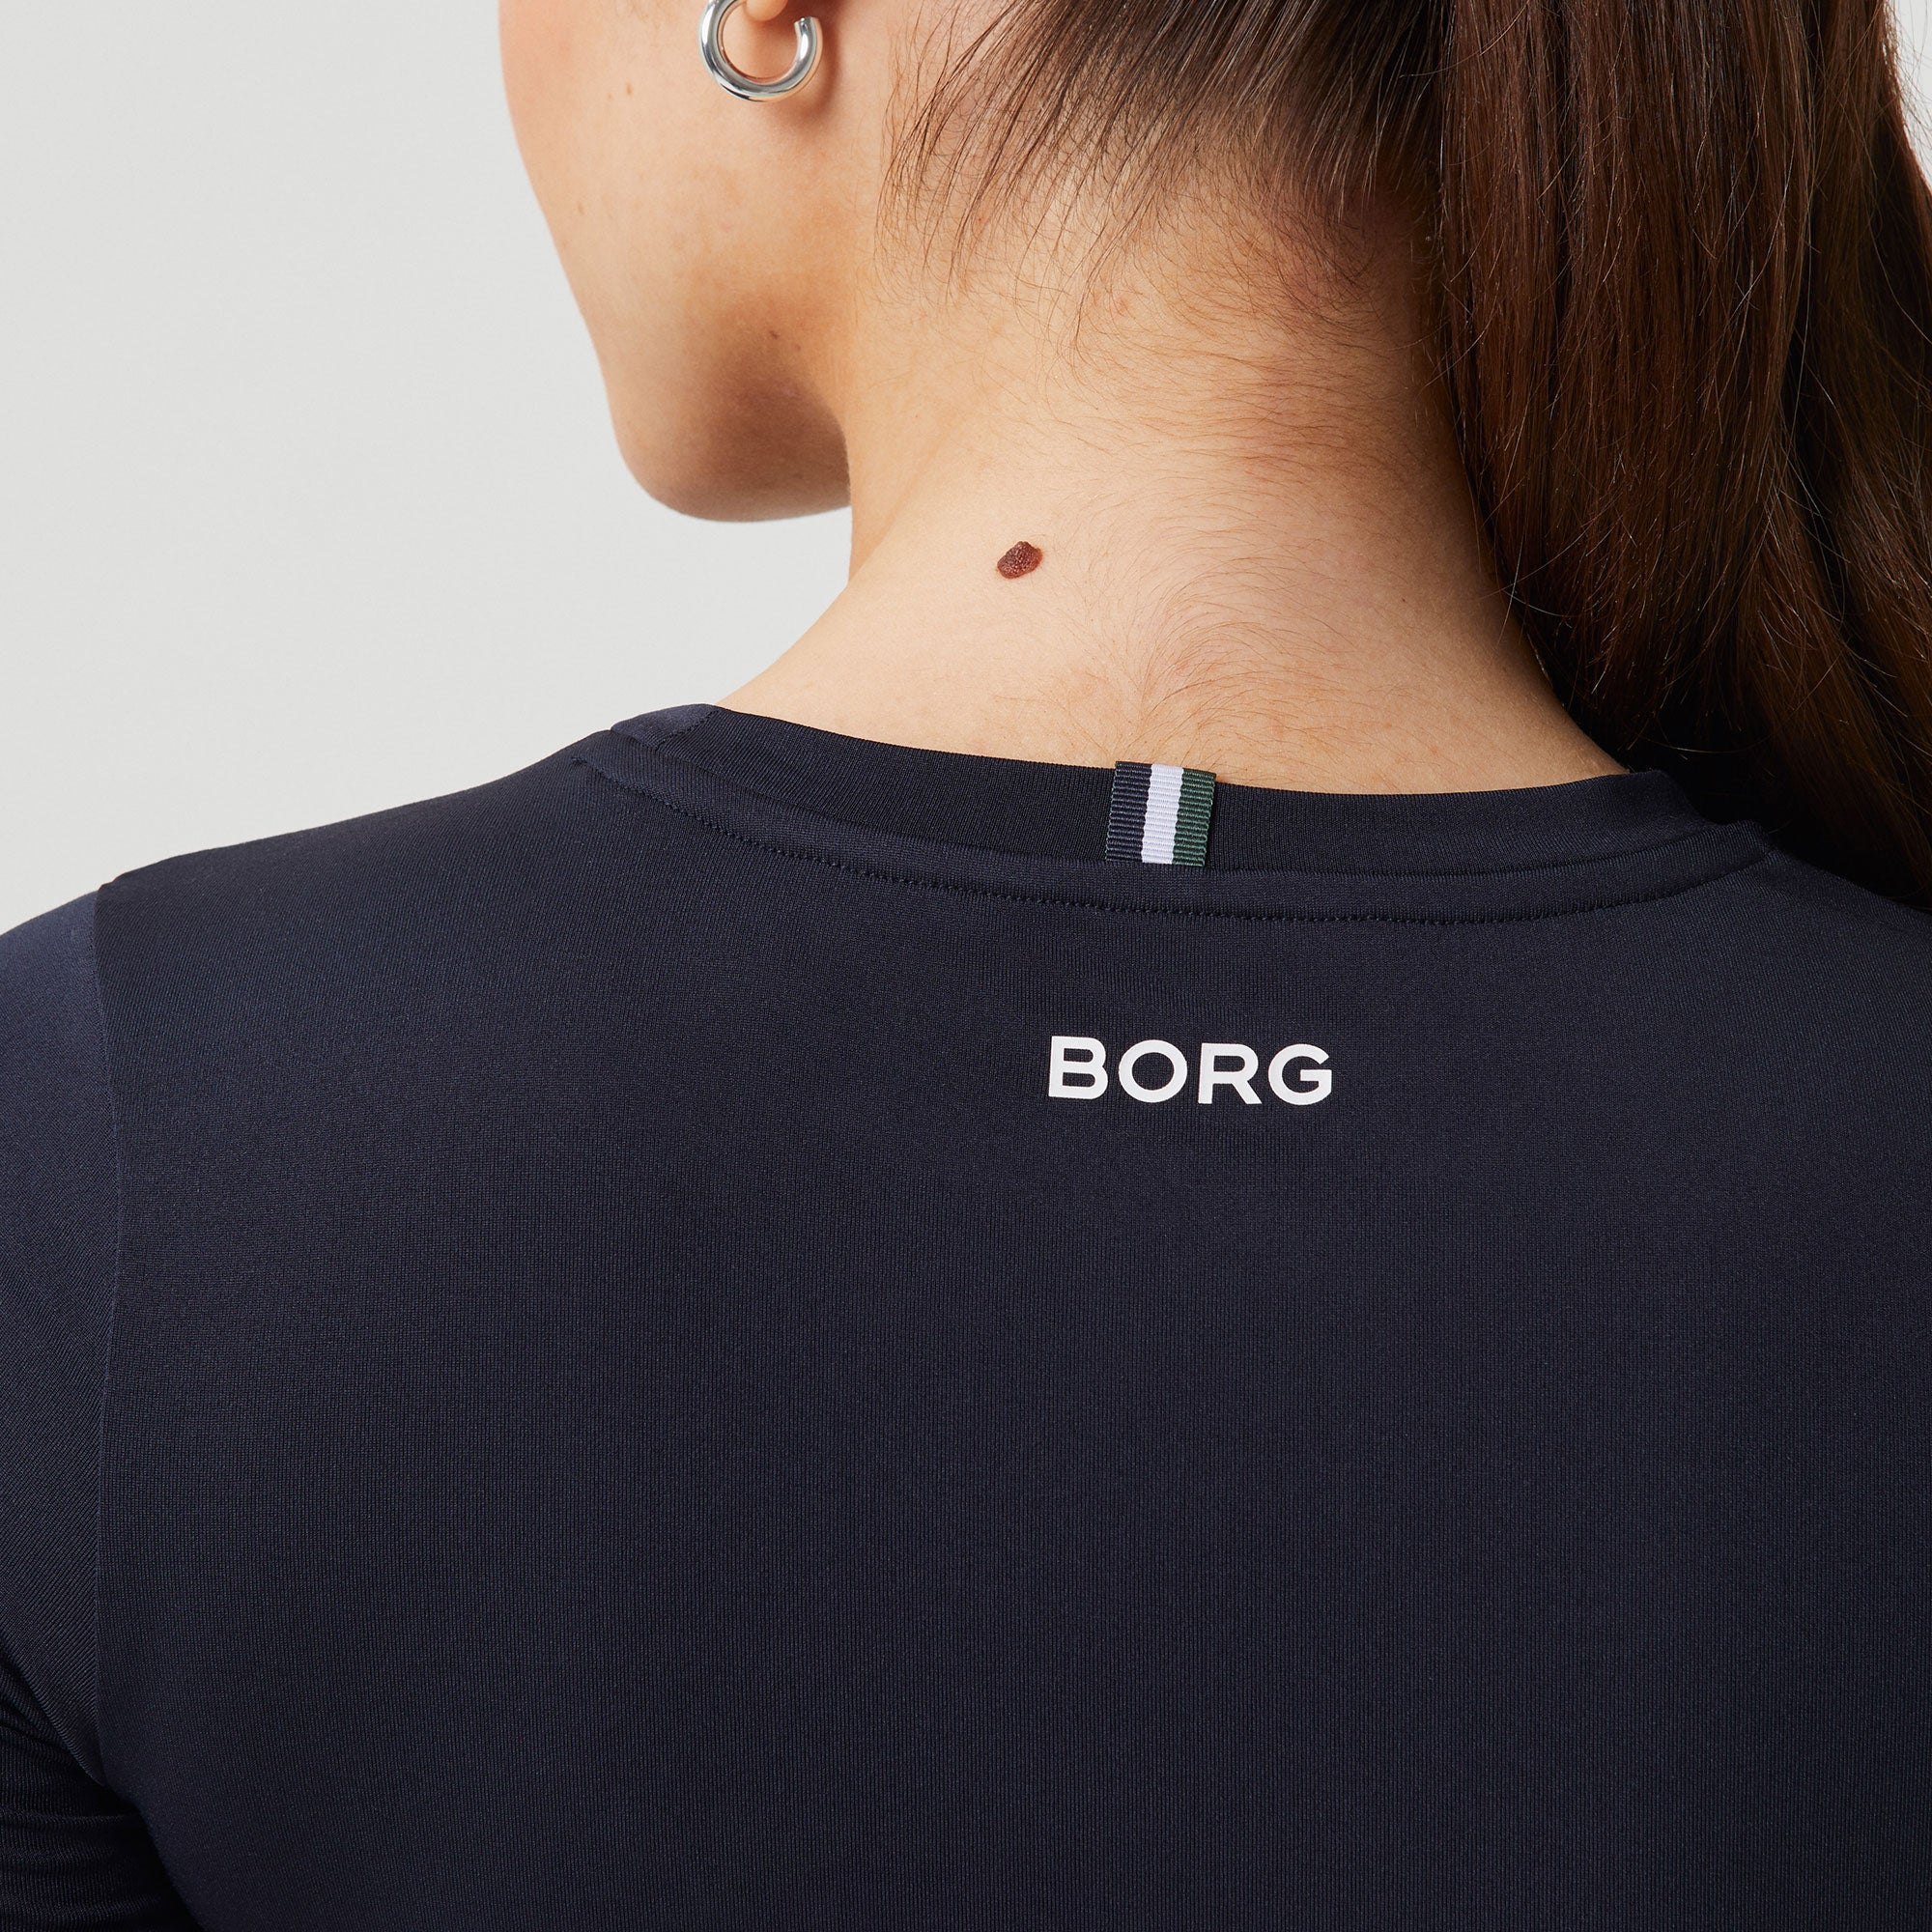 Björn Borg Ace Women's Slim Tennis Shirt - Dark Blue (4)